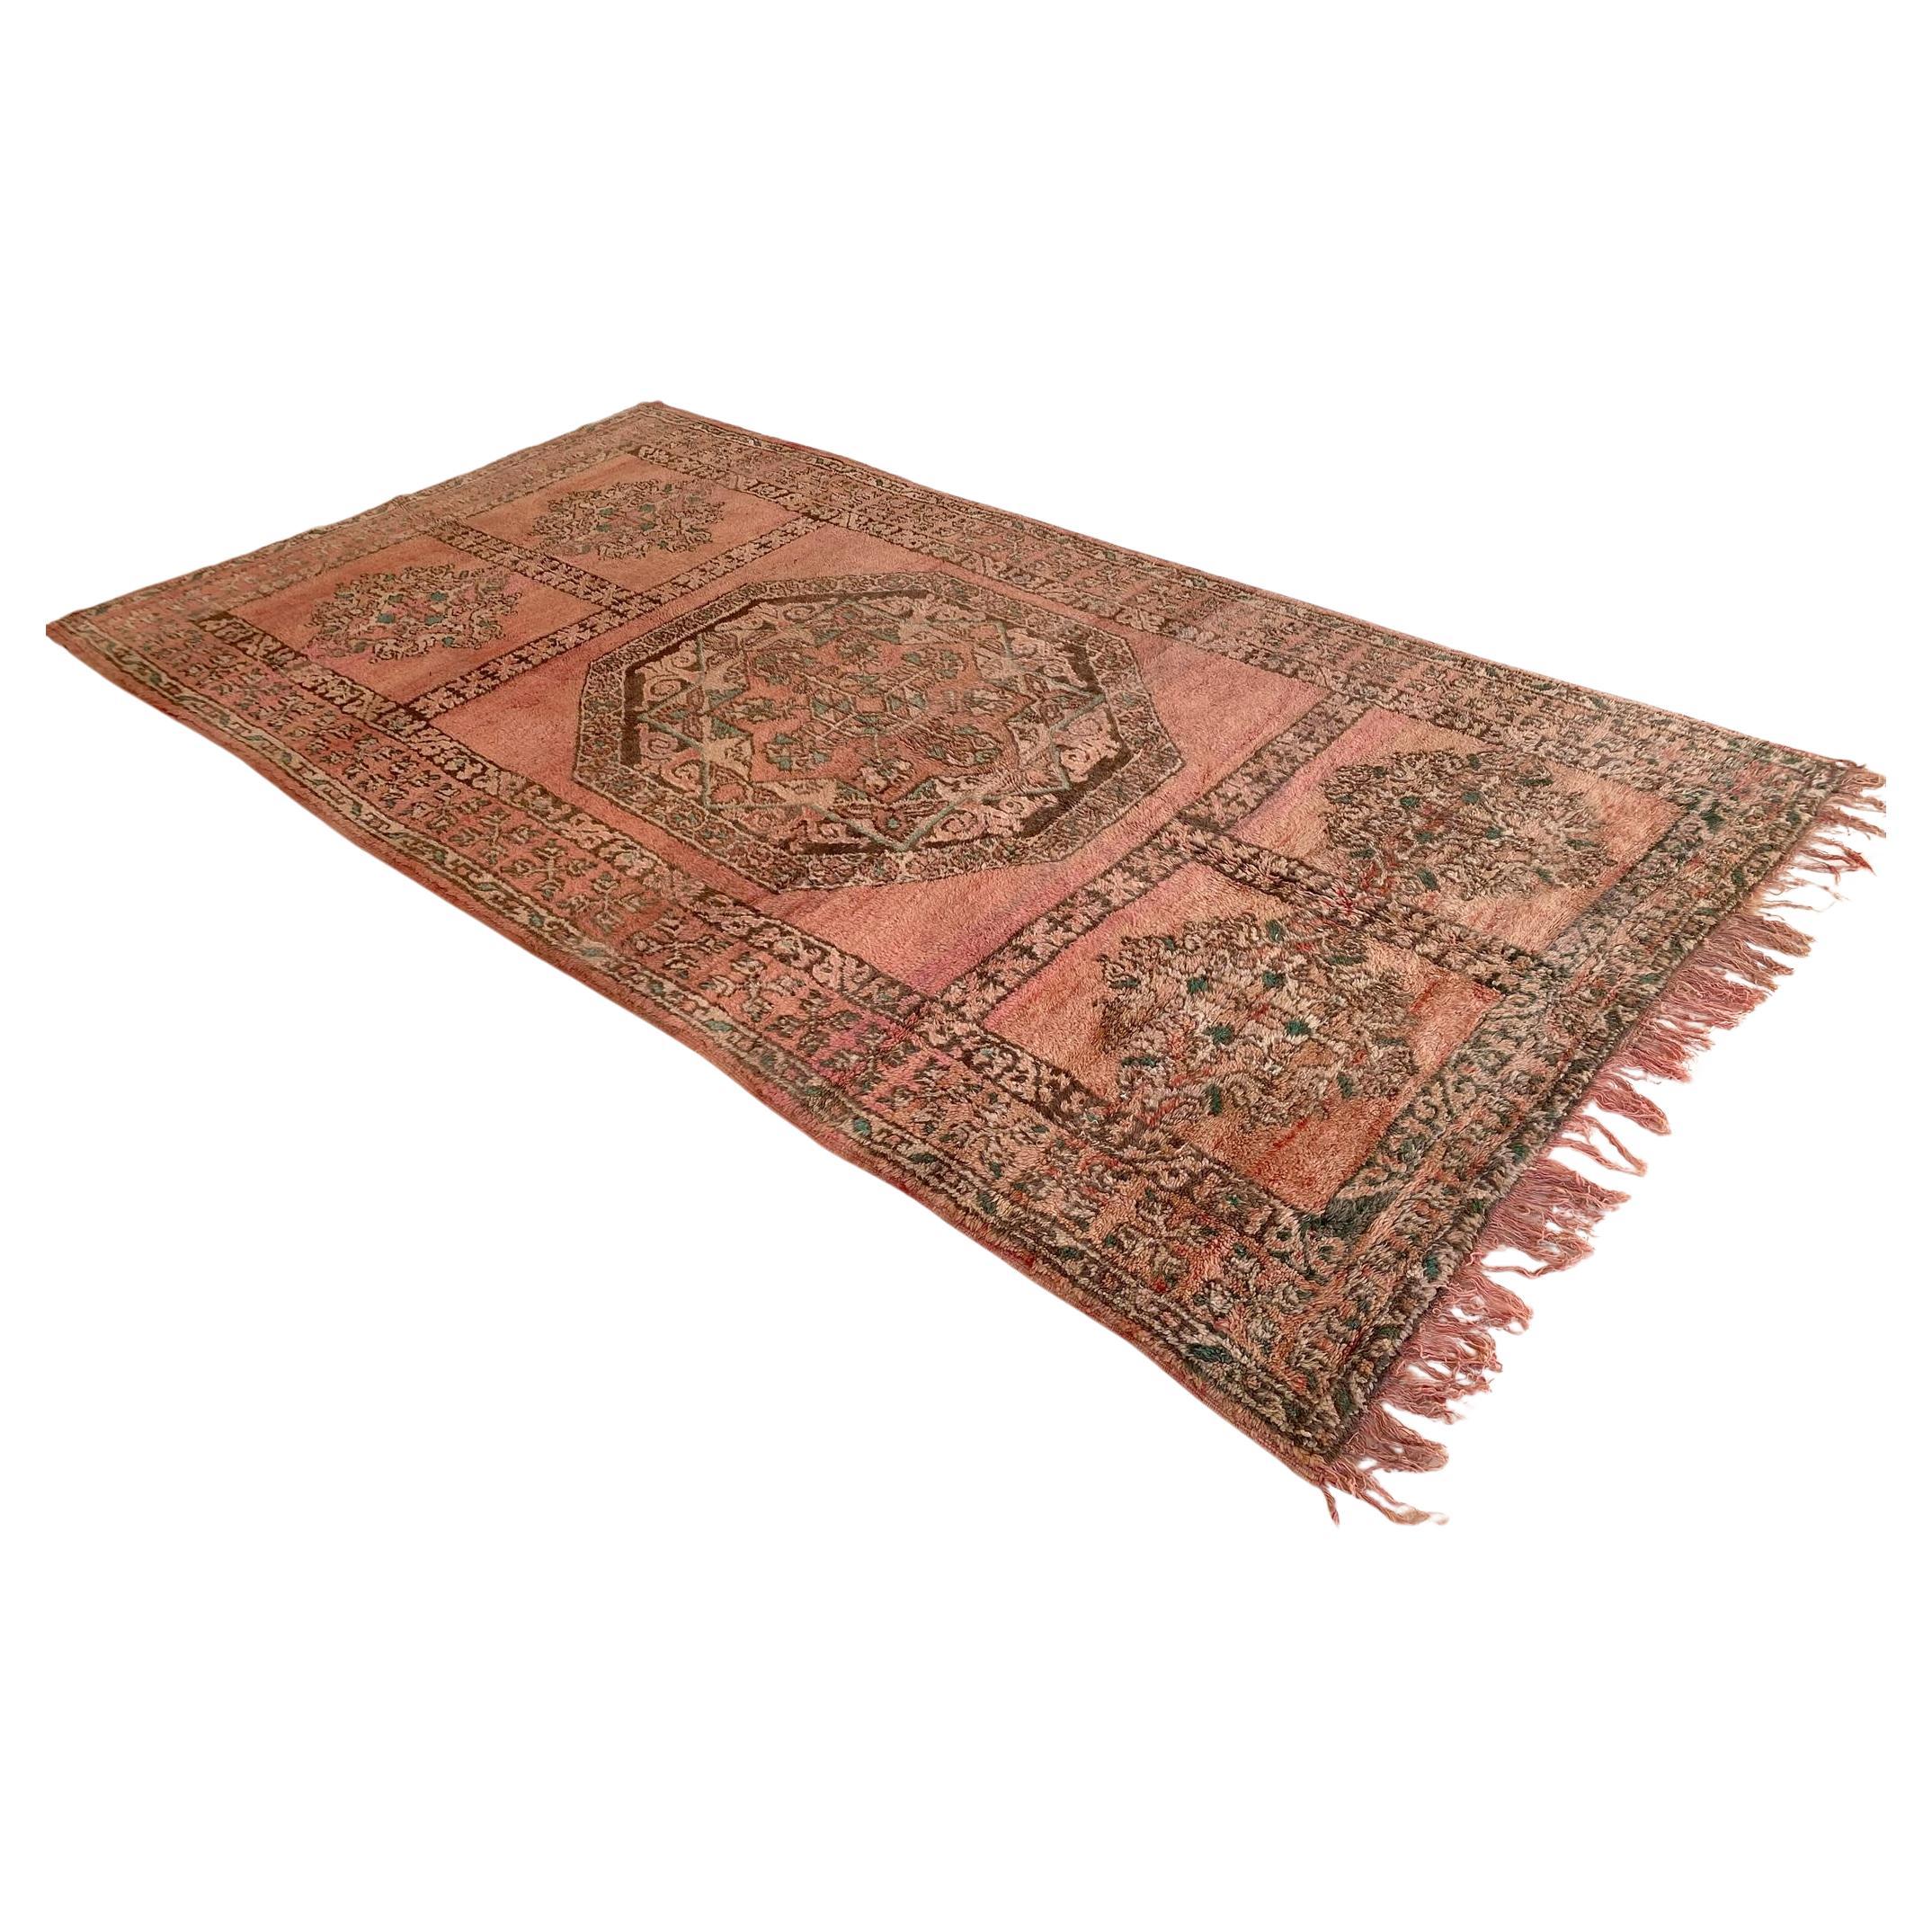 Vintage Moroccan Ait Yacoub rug - Peach fuzz - 7.1x13.3feet / 217x407cm For Sale